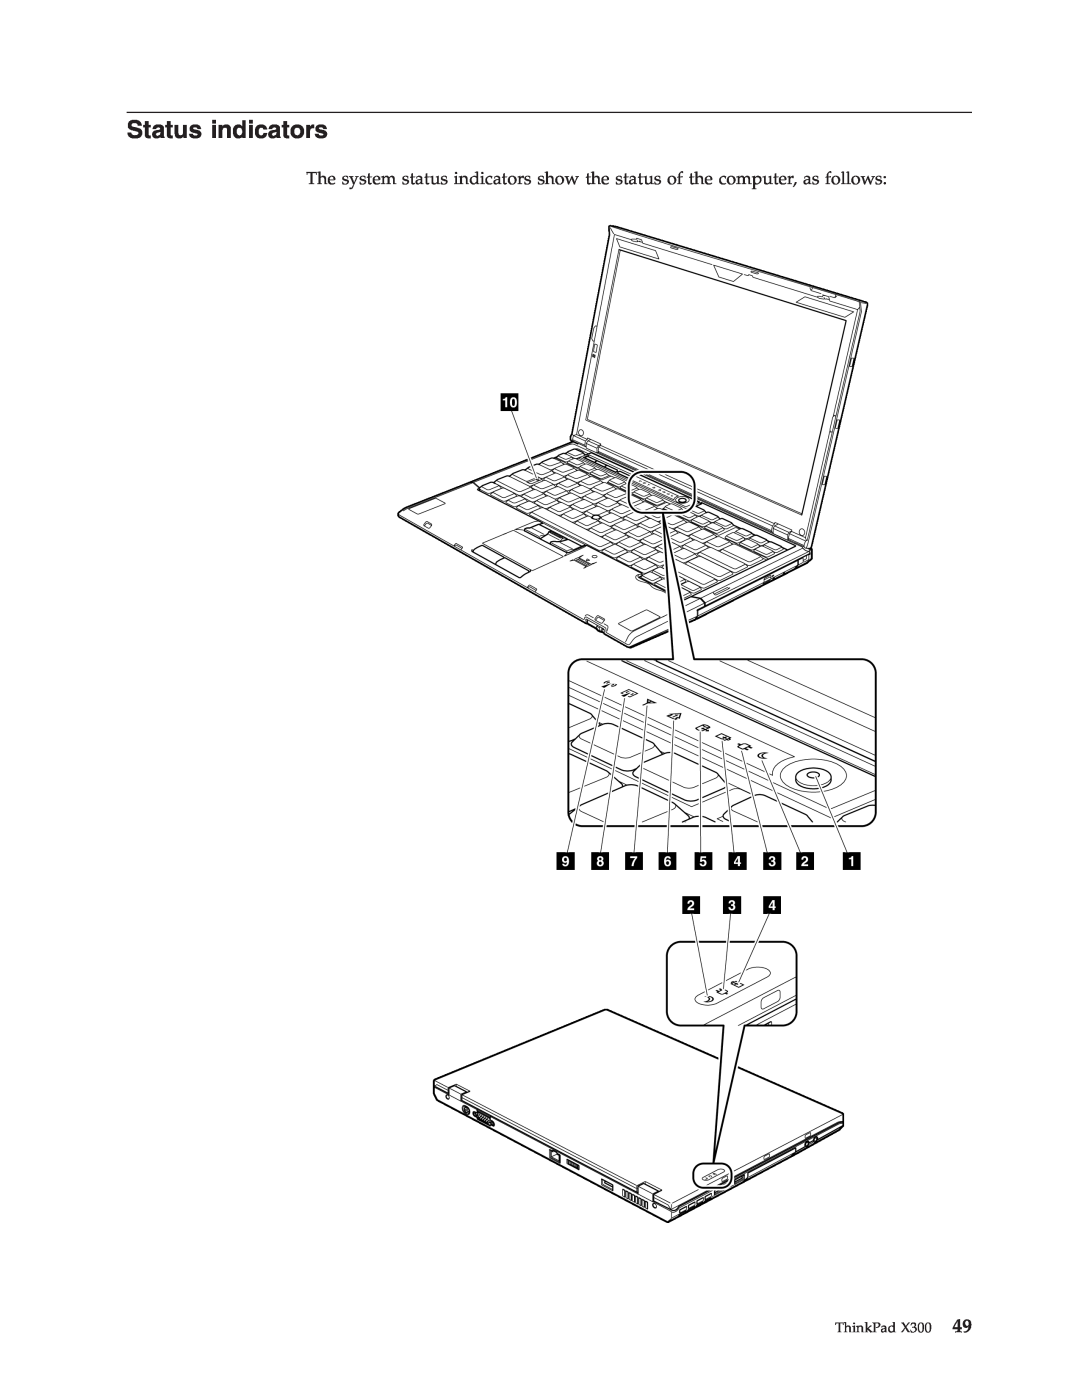 Lenovo manual Status indicators, ThinkPad X300 